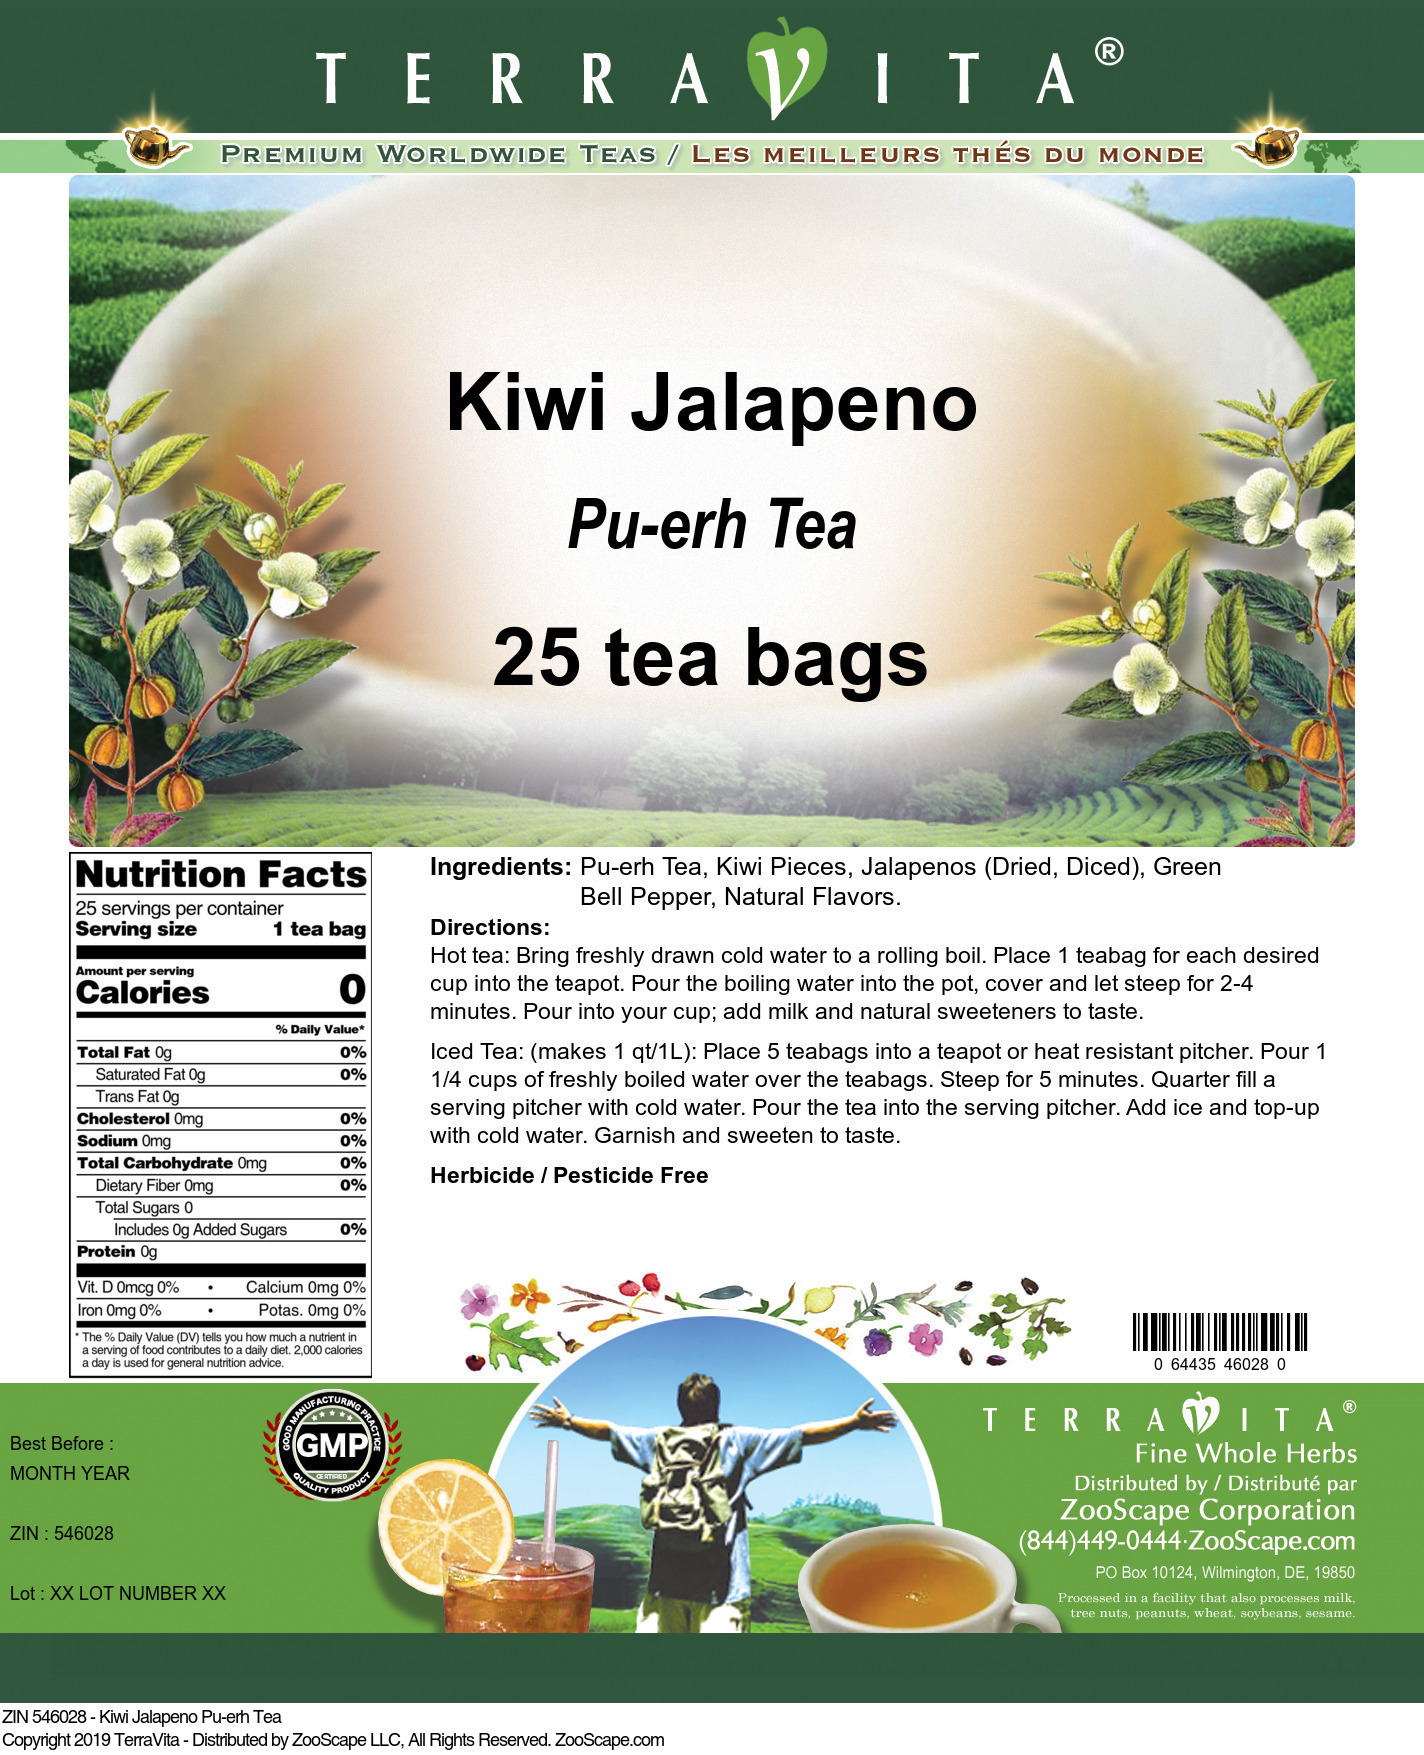 Kiwi Jalapeno Pu-erh Tea - Label